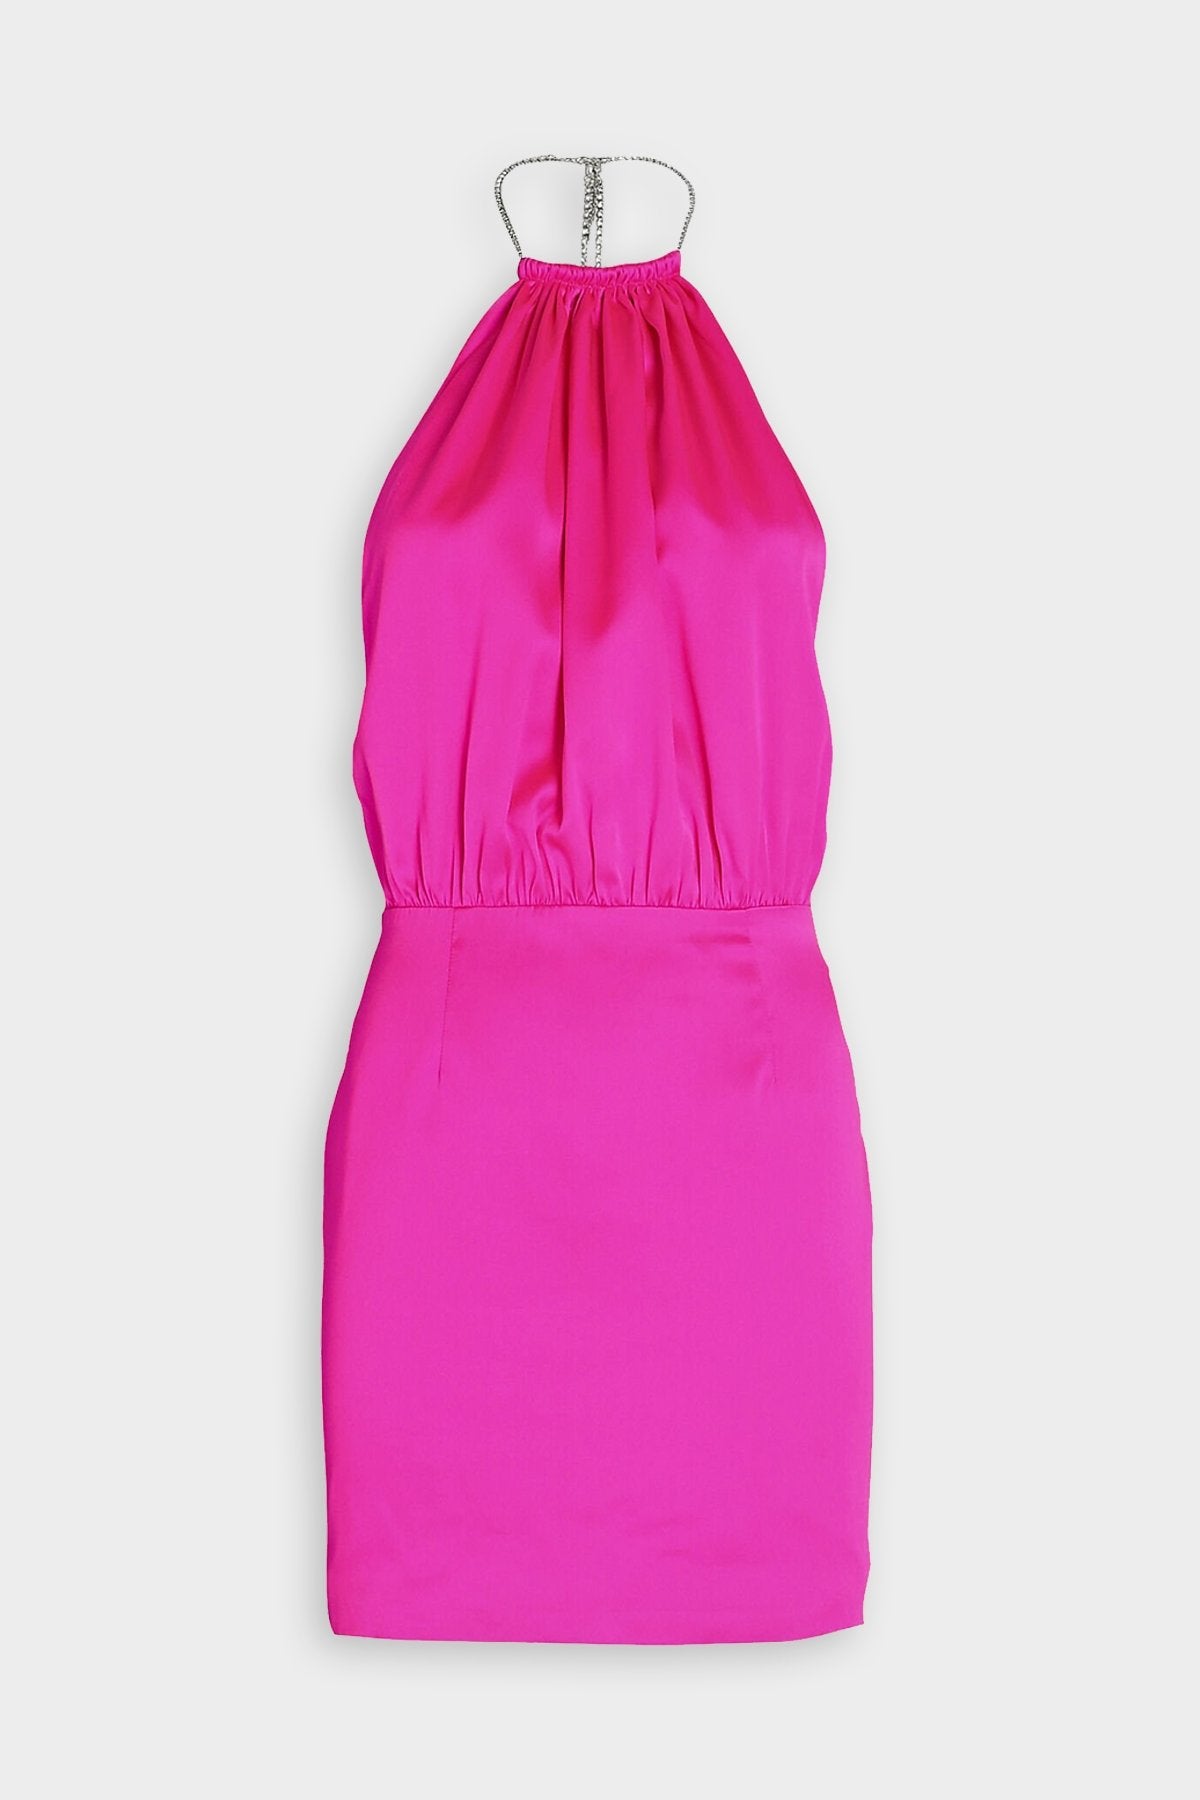 Anahita Dress in Neon Pink - shop-olivia.com